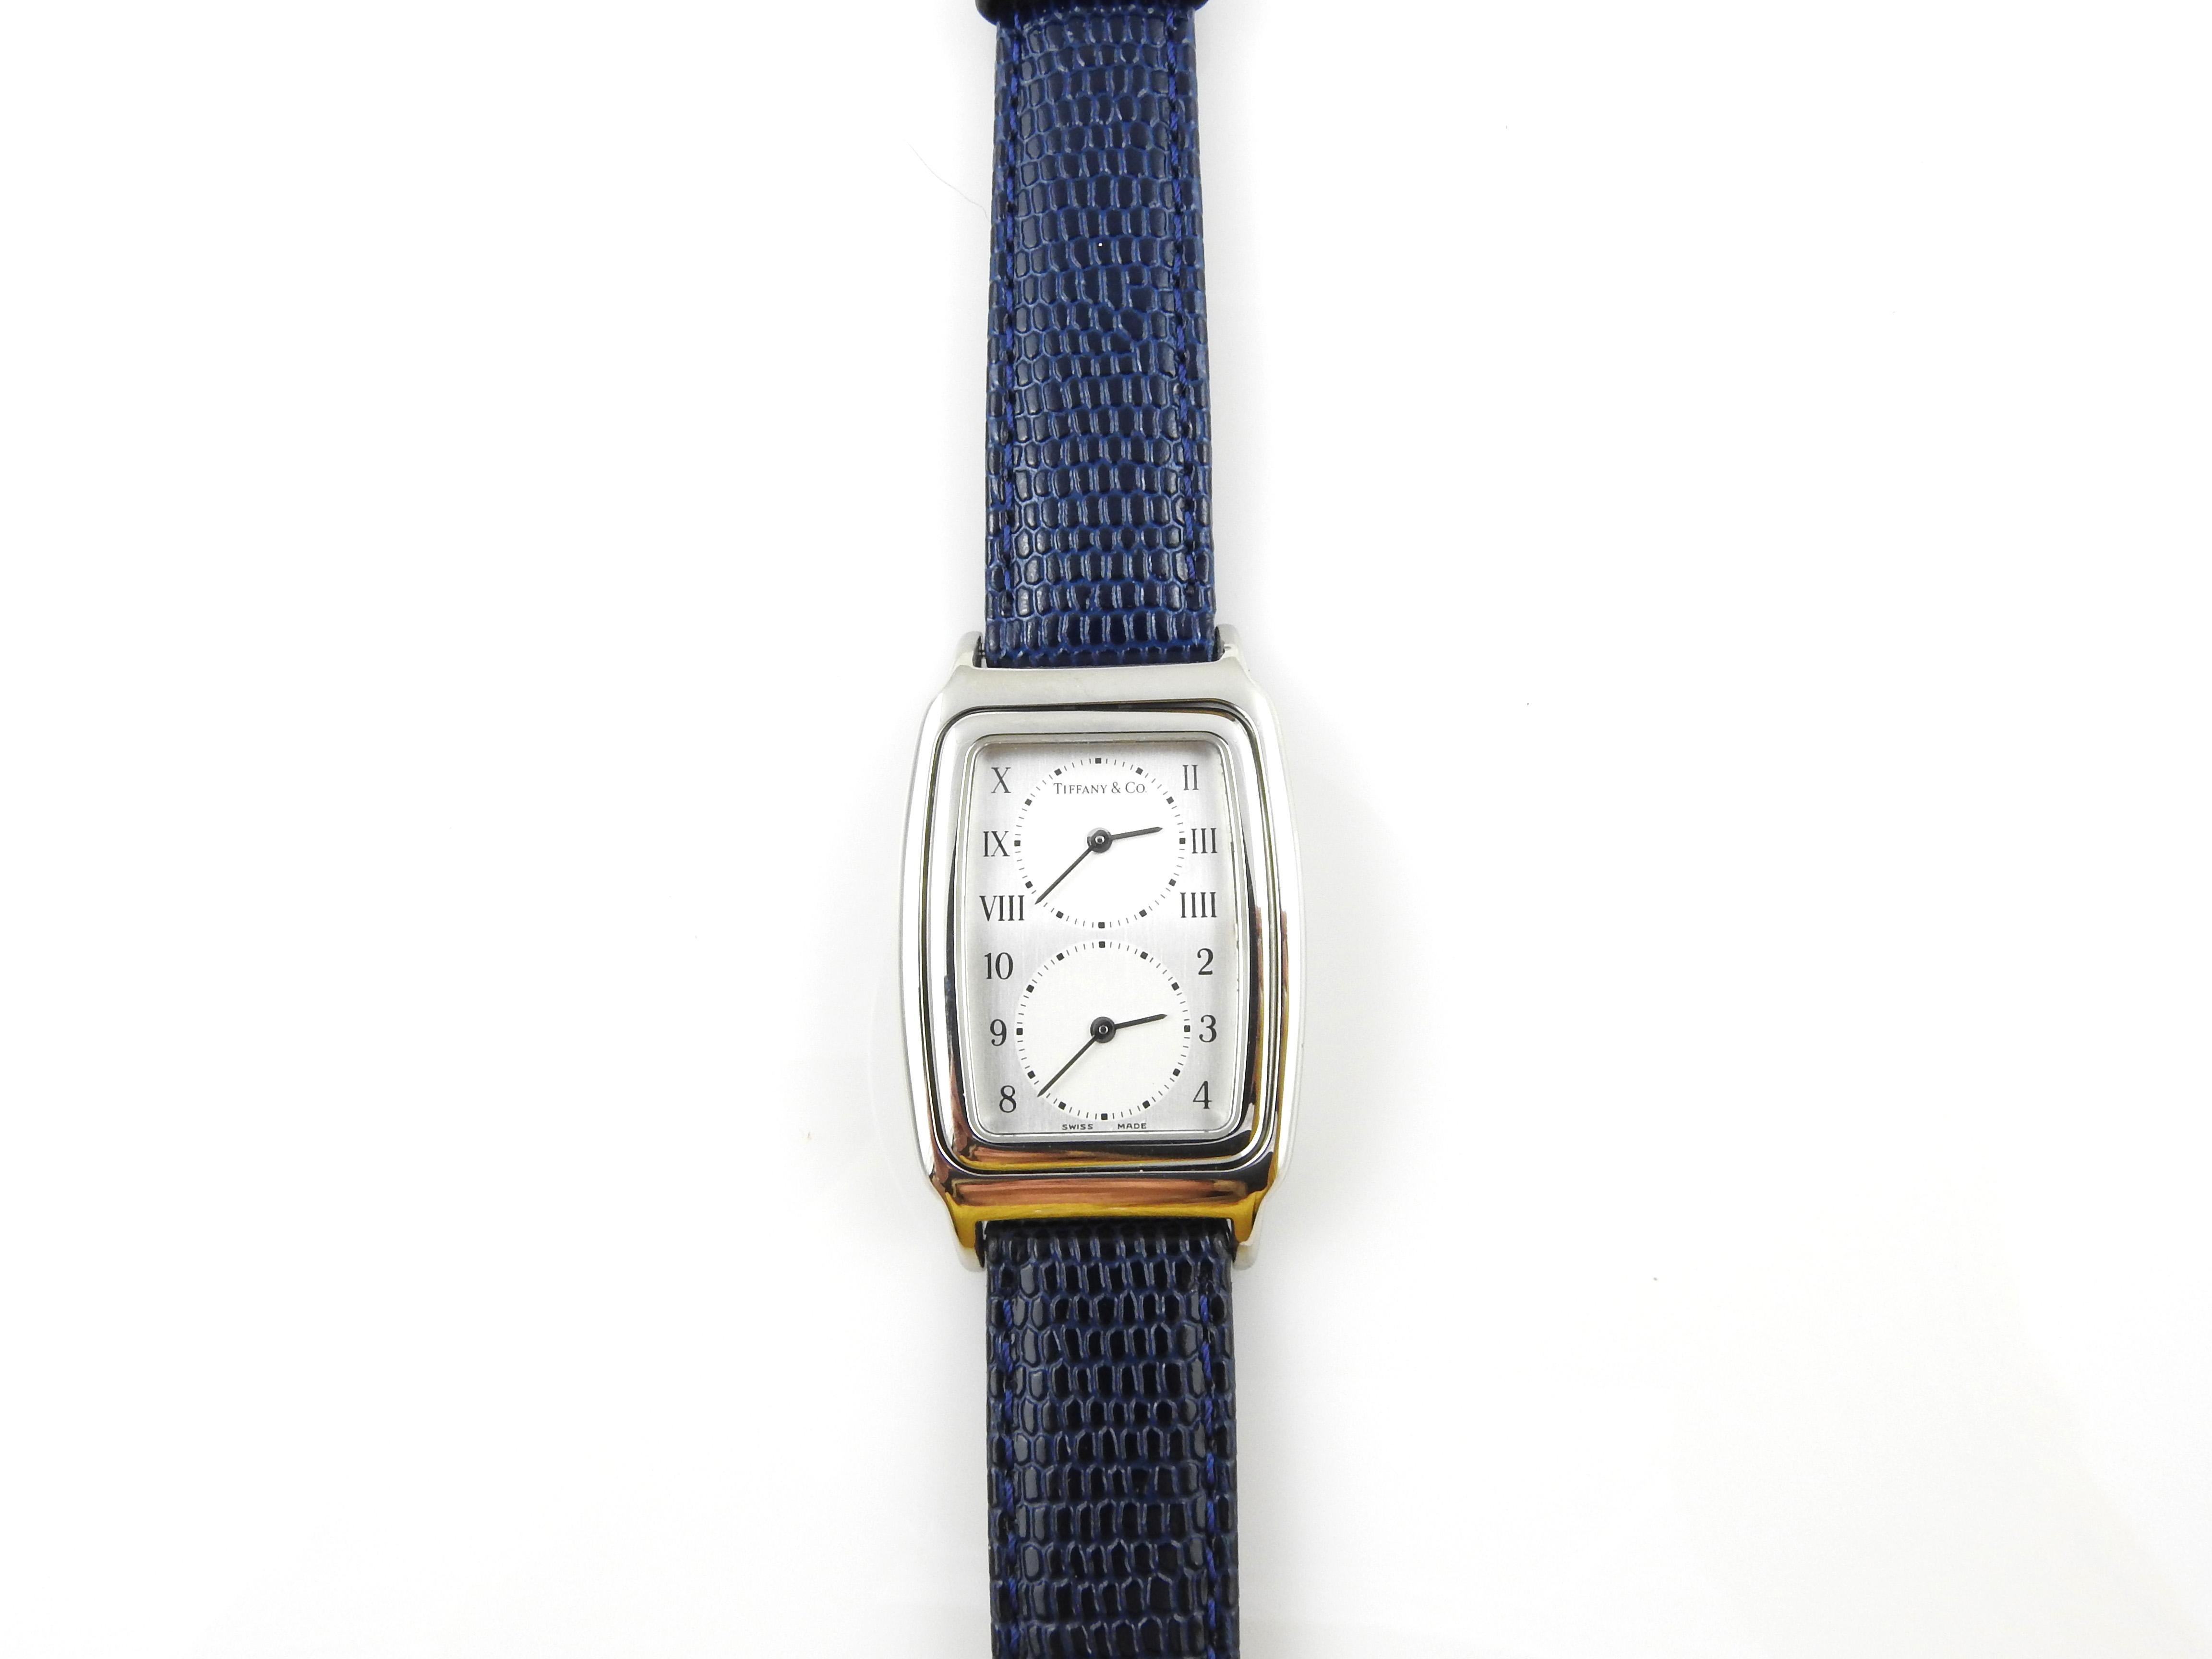 Tiffany & Co. Men's Stainless Steel Dual Time Quartz Rectangular Watch M201 3